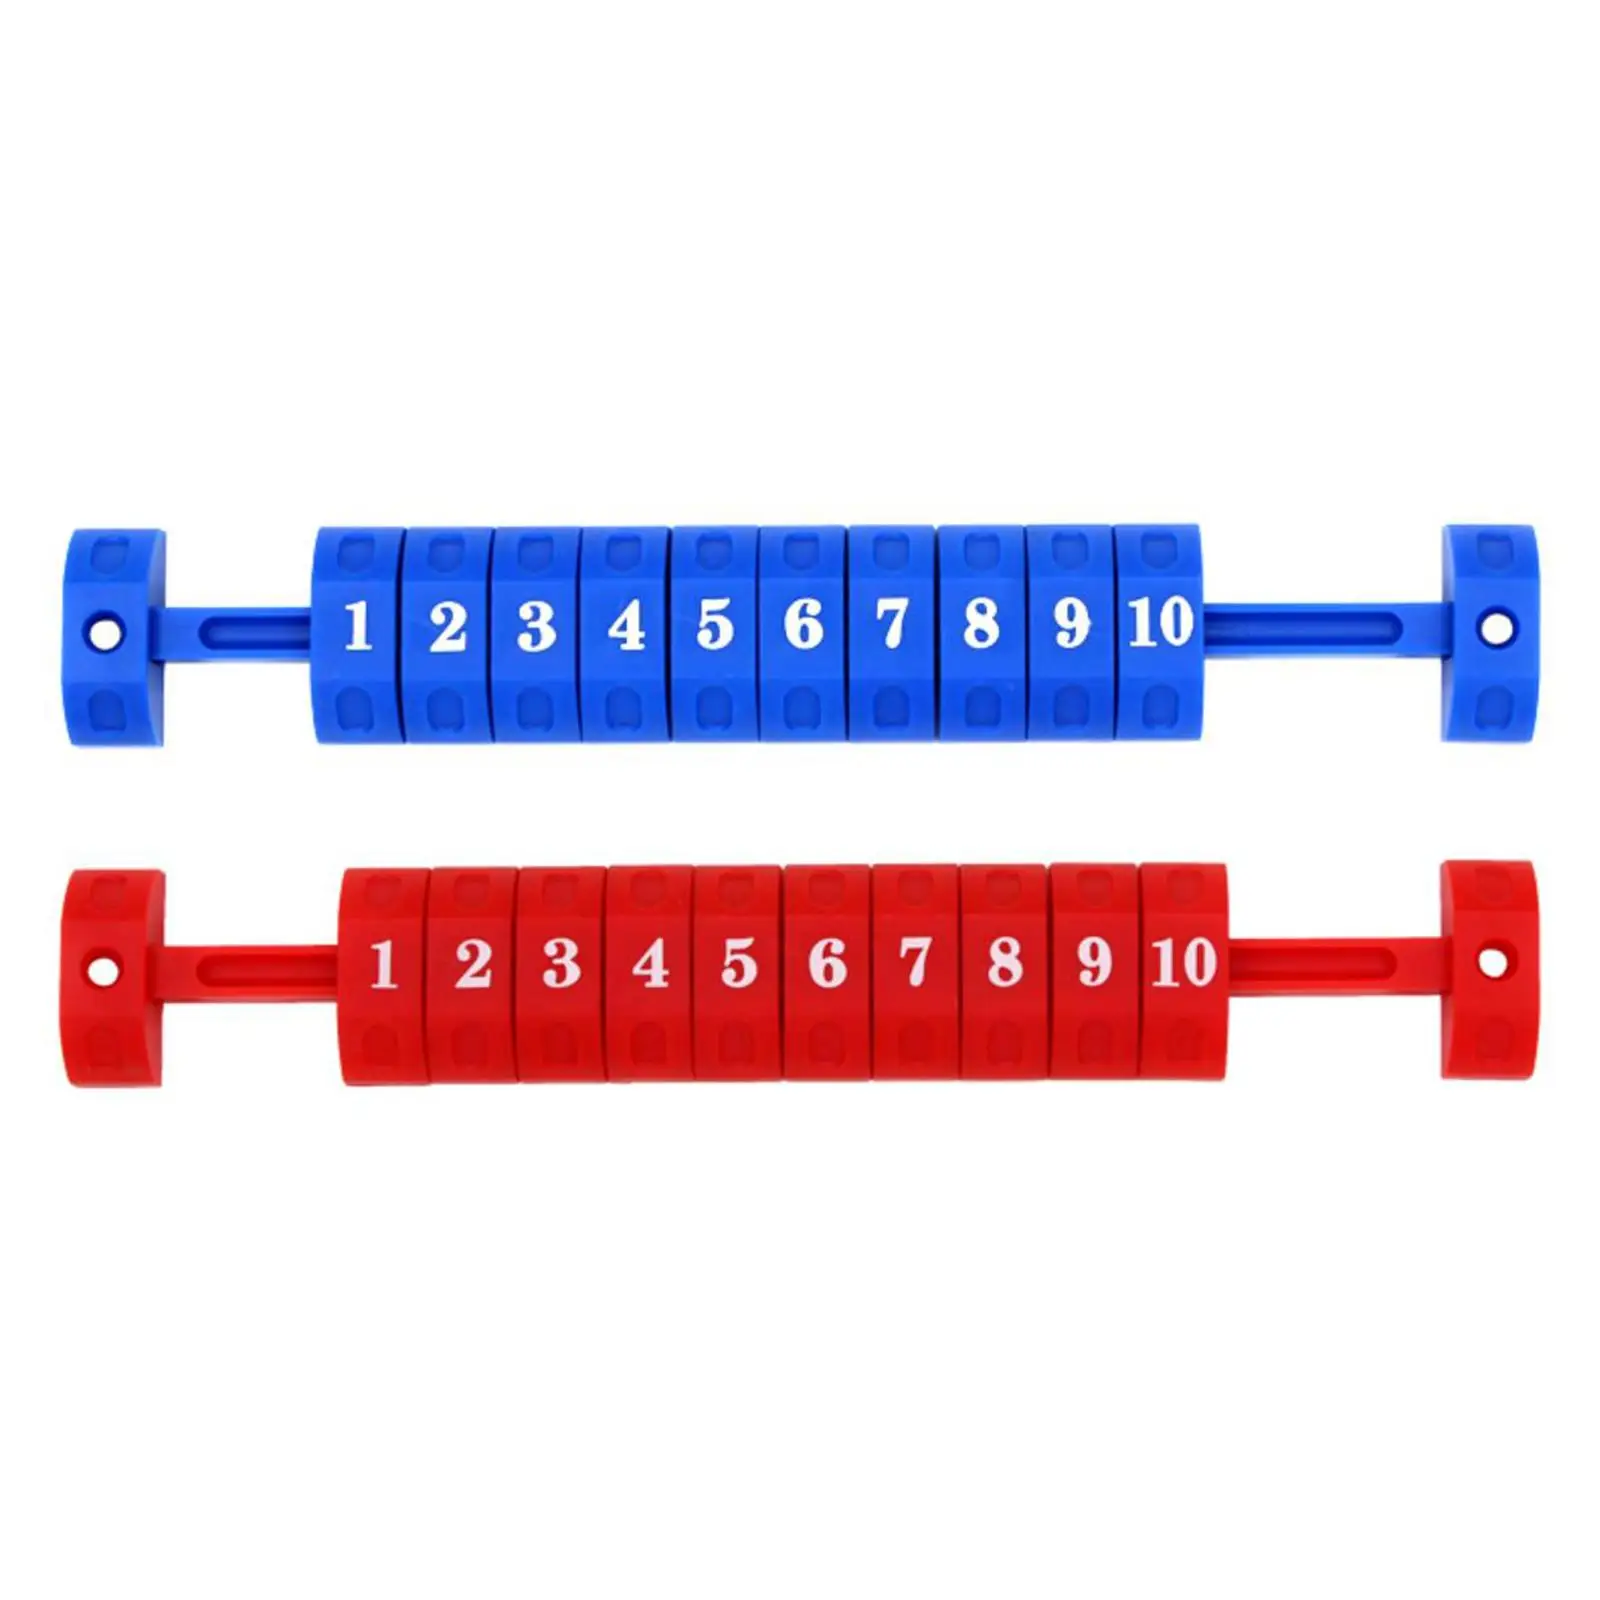 2x Universal Foosball Scoreboard Indicator Scoring Units for